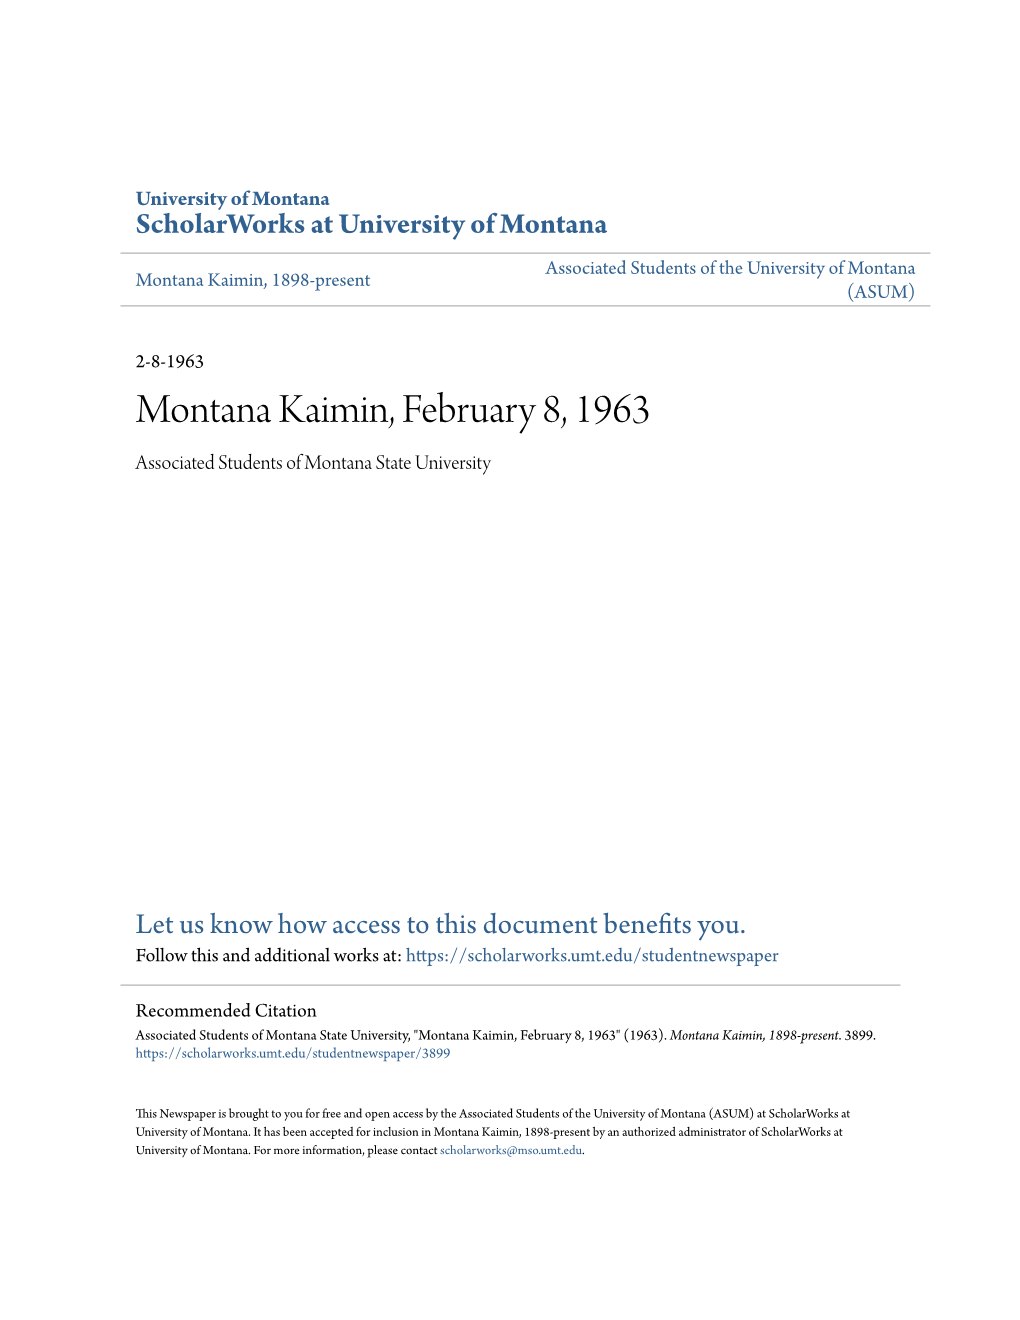 Montana Kaimin, February 8, 1963 Associated Students of Montana State University